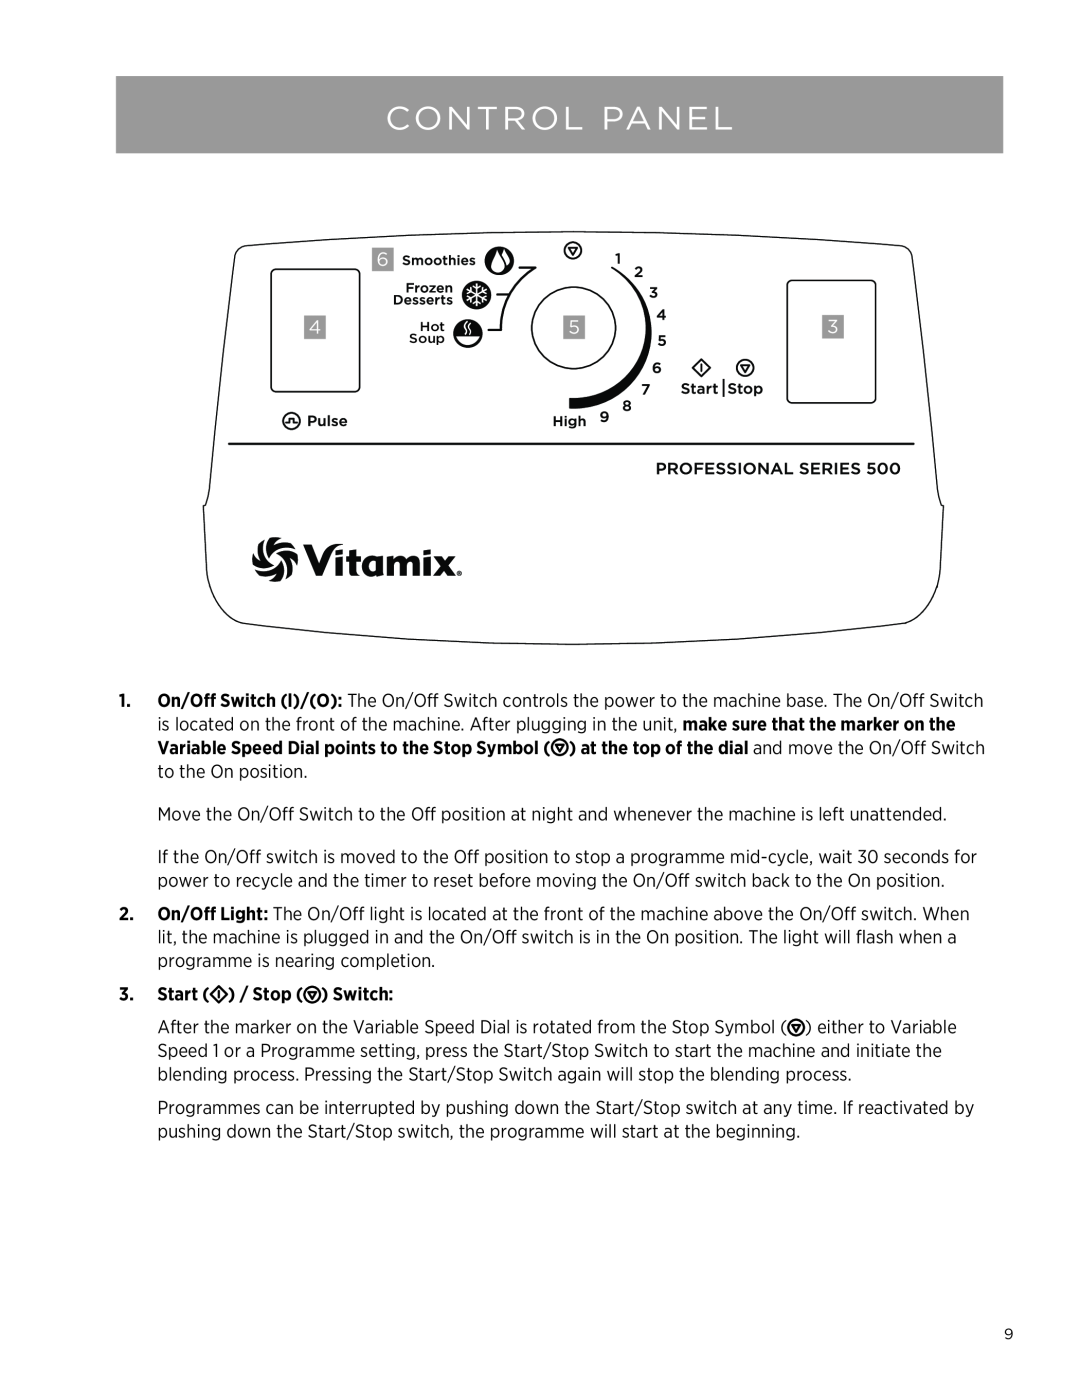 Vita-Mix Professional Series 500 owner manual Control Panel, Start / Stop Switch 